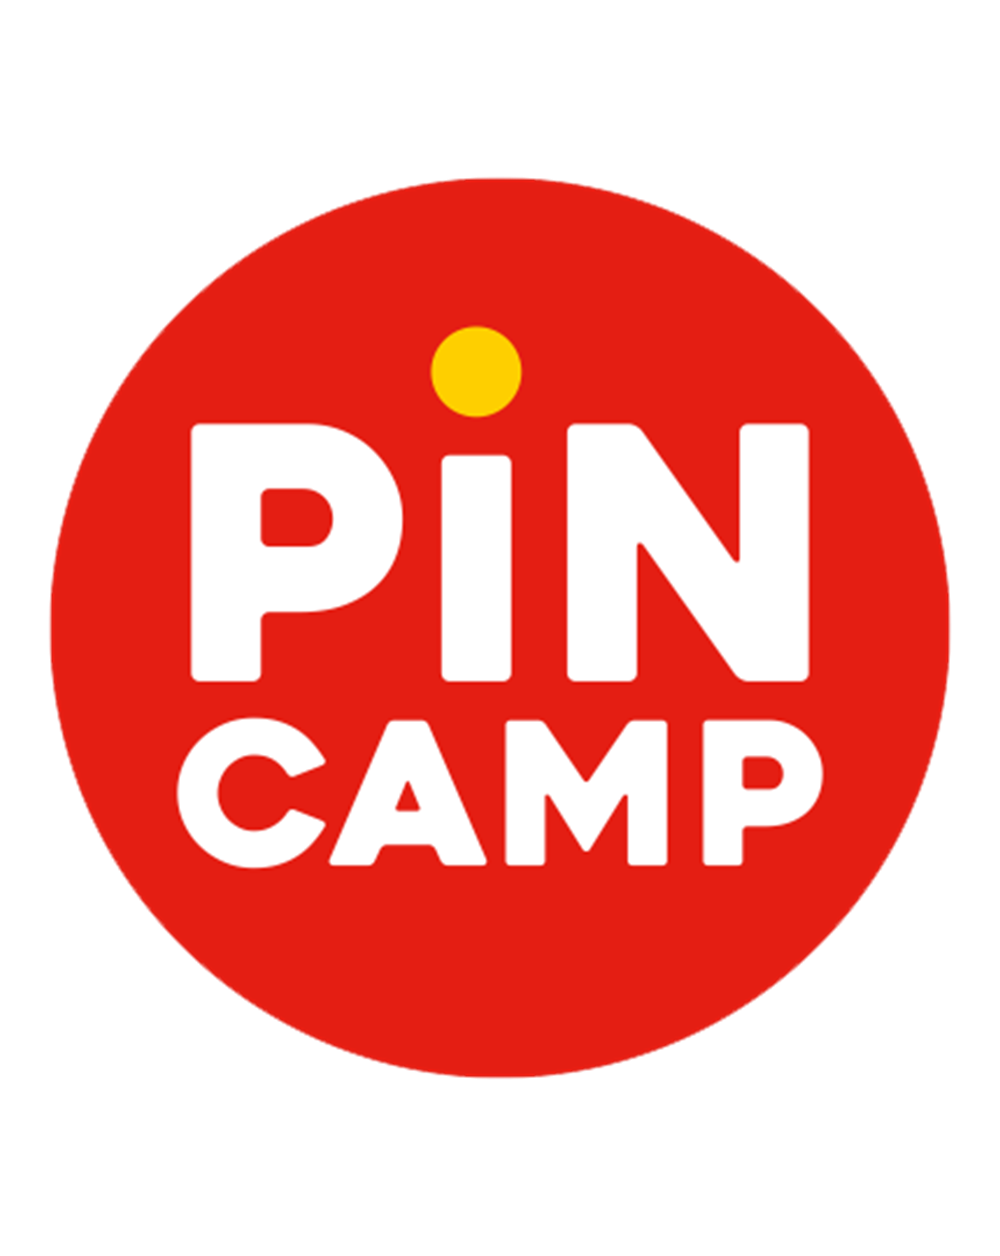 Market your campsite on PiNCAMP.COM